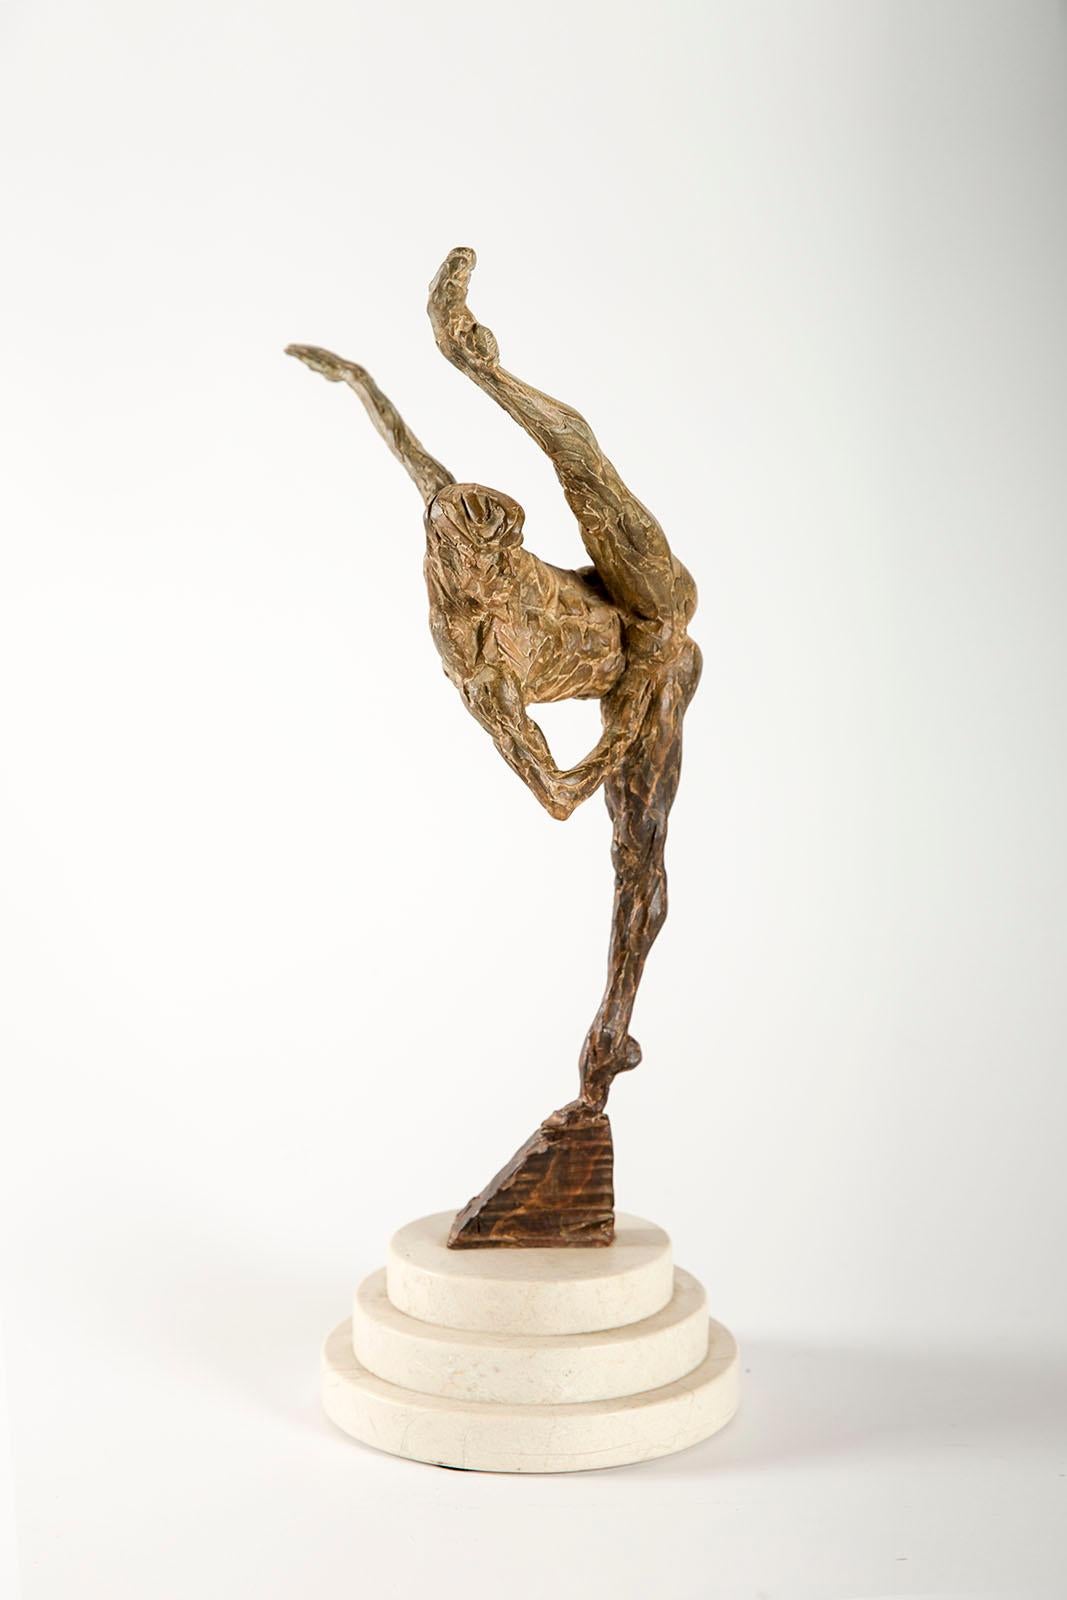 Richard Macdonald Chroma II bonze 1/8 life sculpture - Sculpture by Leonardo Nierman